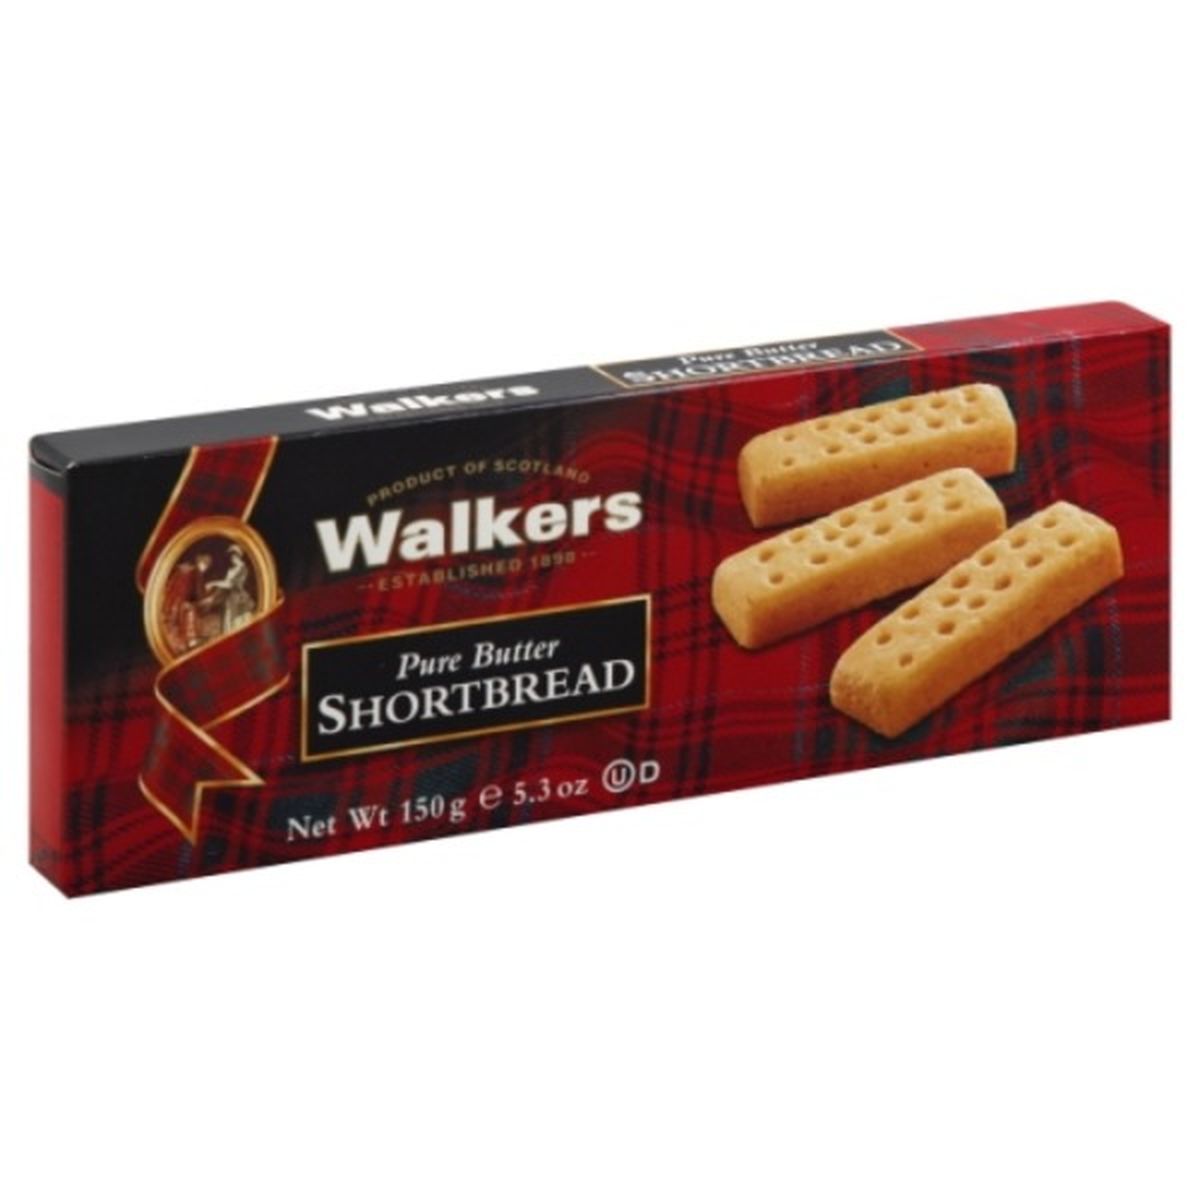 Calories in Walkers Shortbread, Pure Butter